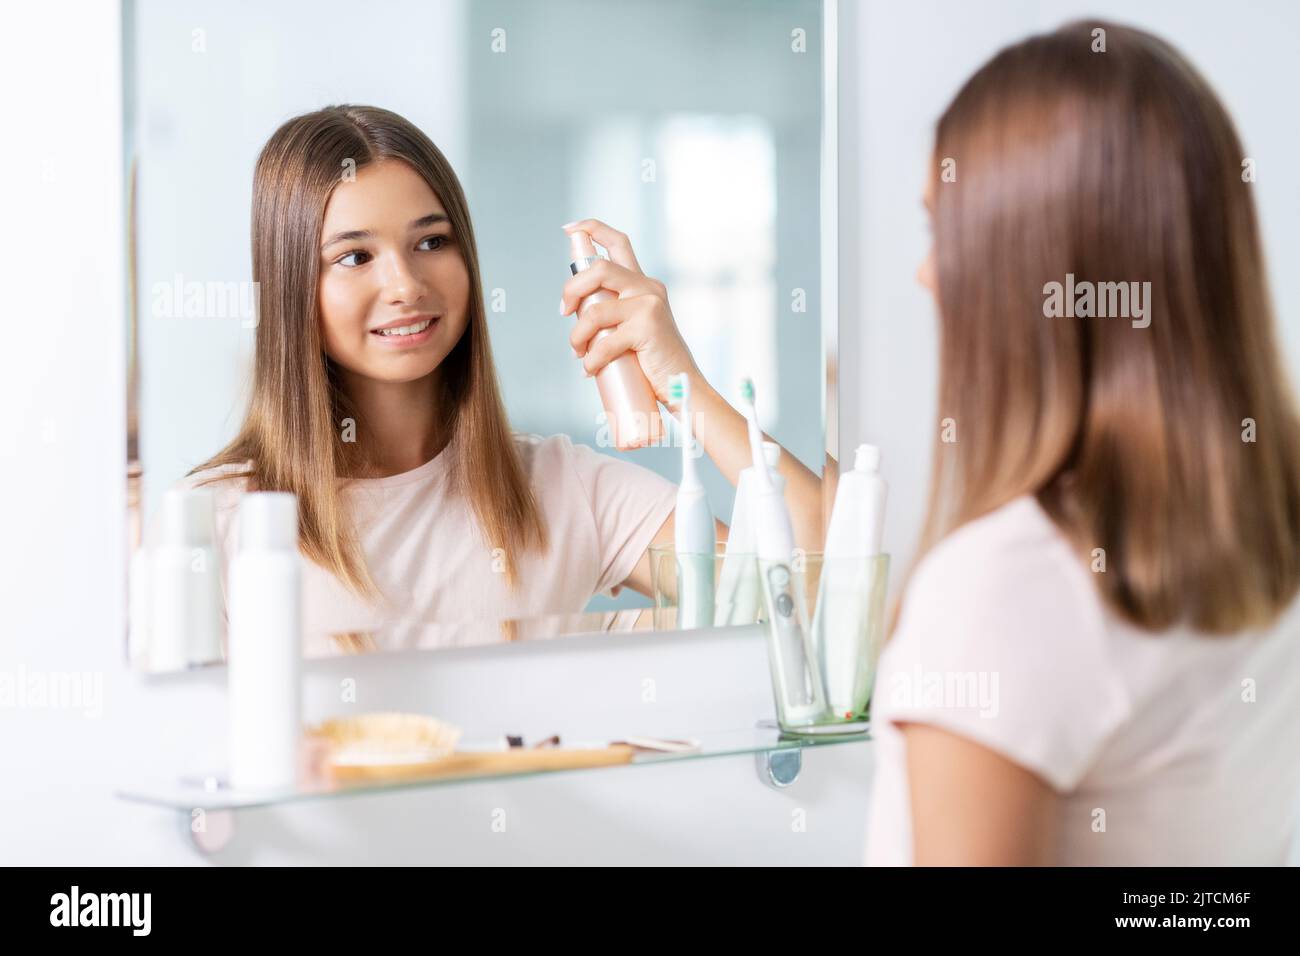 teenage girl using hair styling spray at bathroom Stock Photo